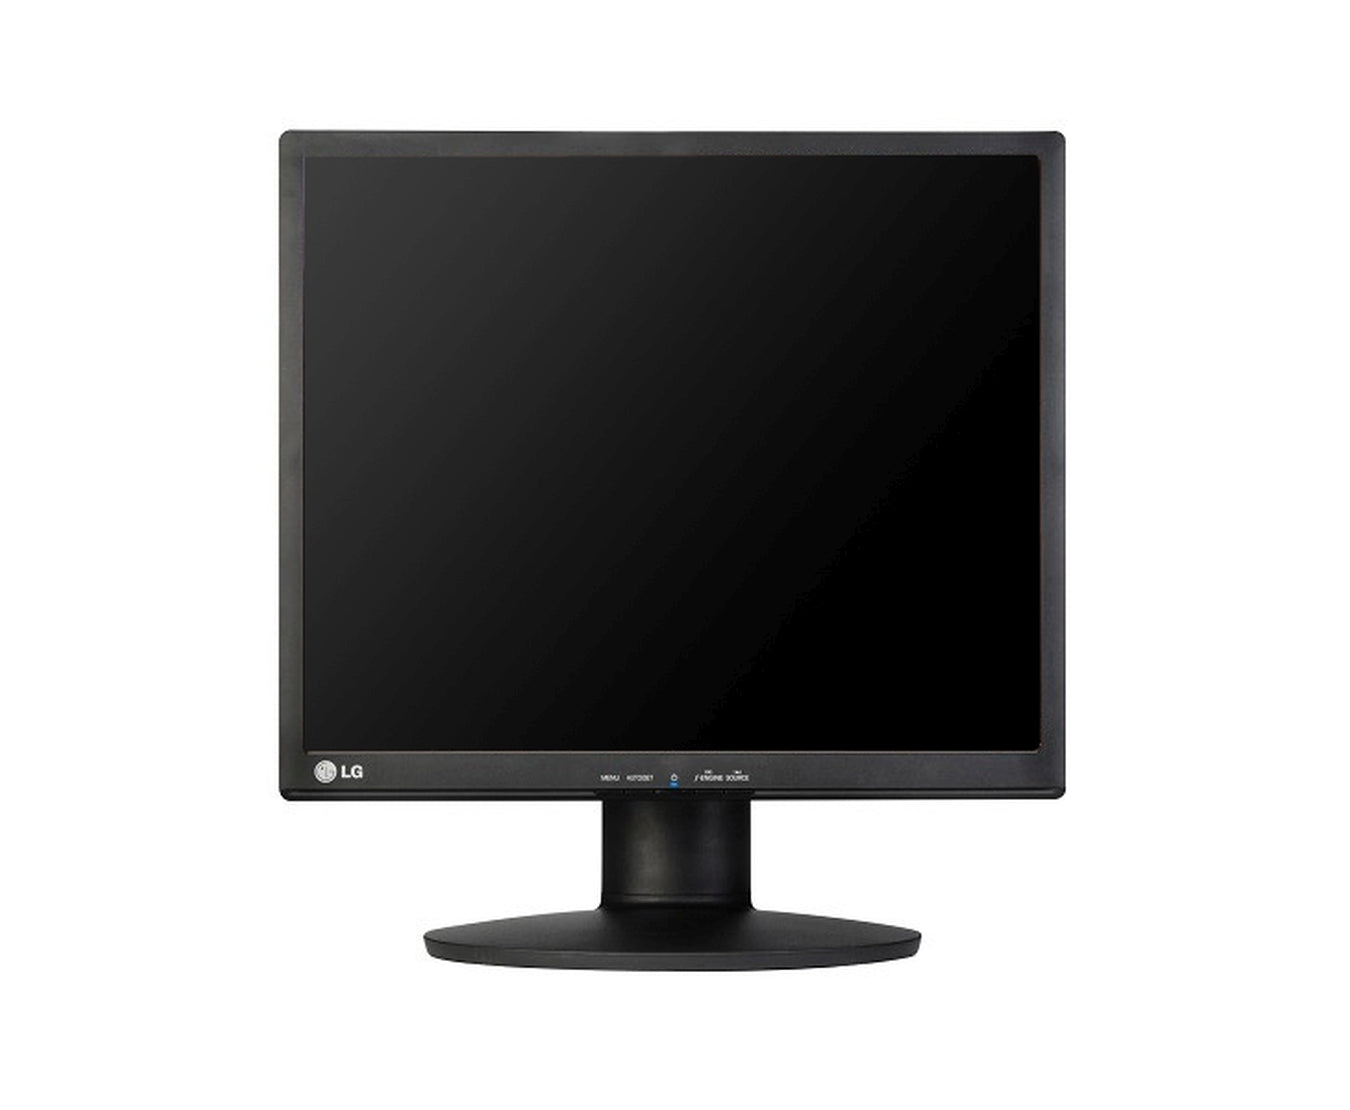 LG 17' 17MB15P LCD Monitor 4:3 1280x1024 5ms 5M:1 VGA DVI Pivot Height Adjust Tilt 3yrs LG